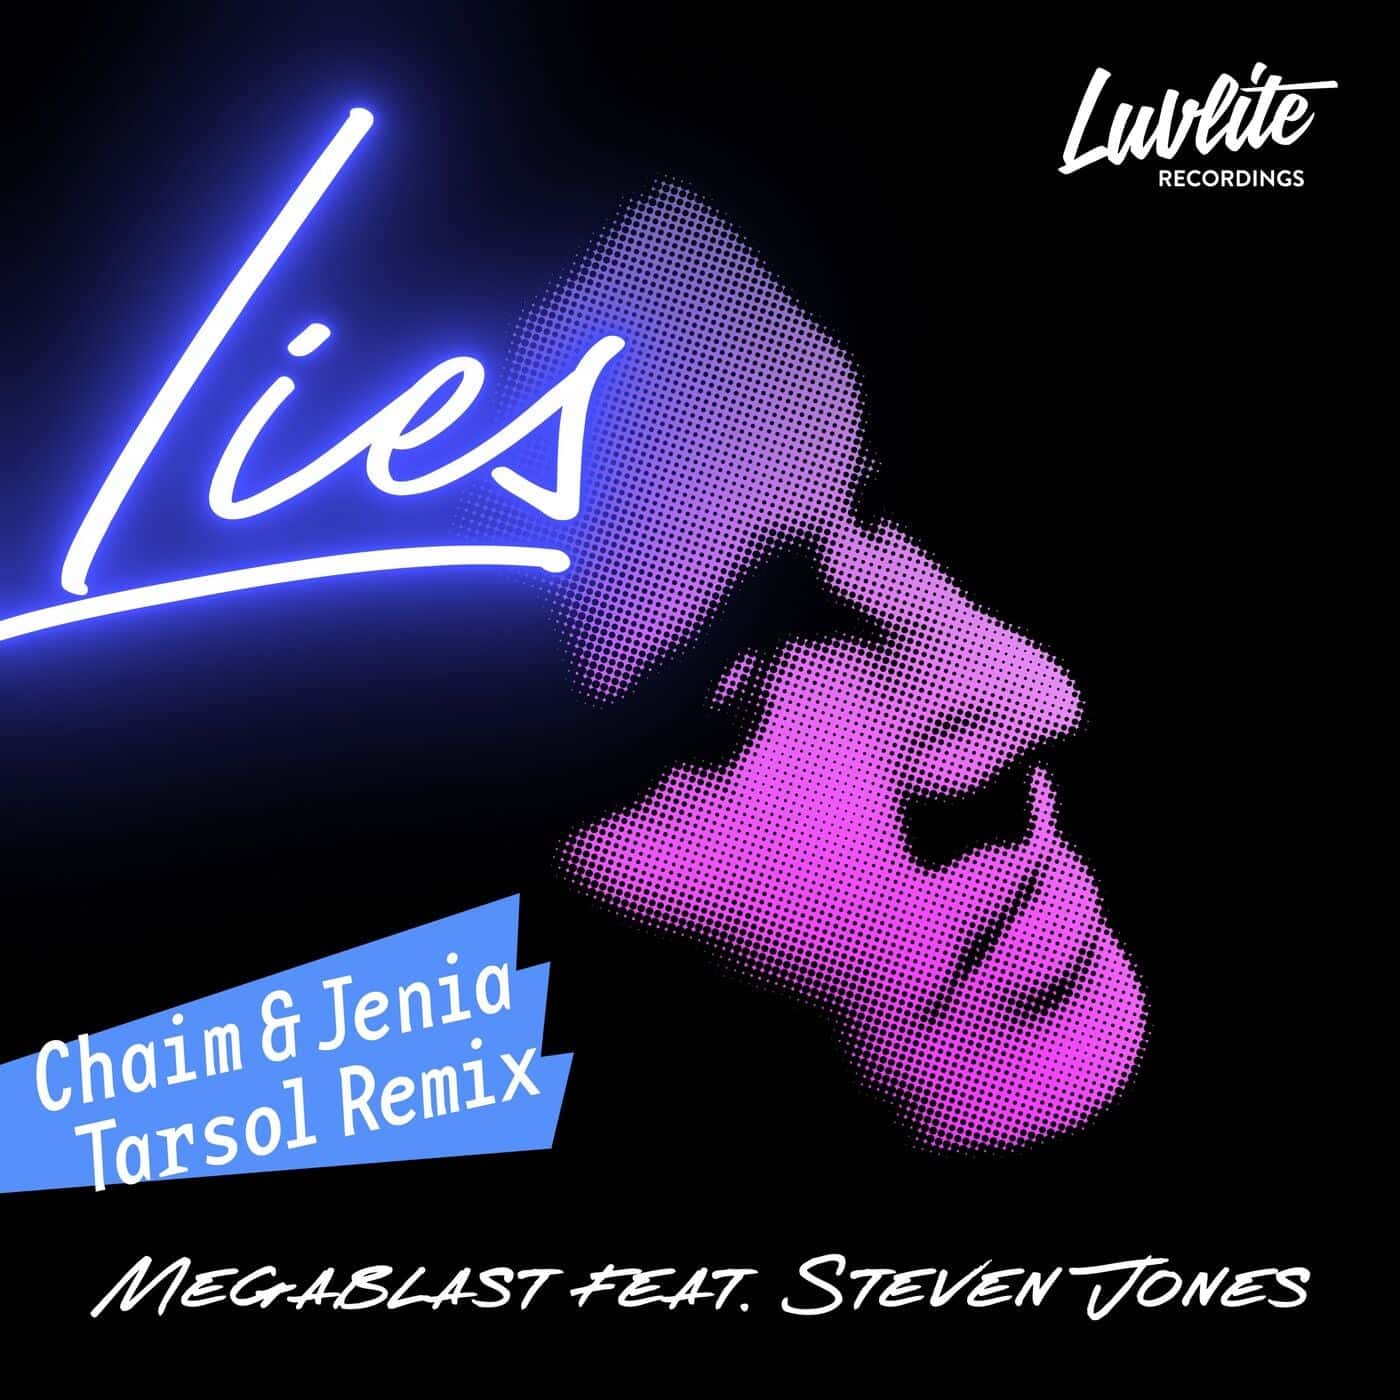 image cover: Megablast, Steven Jones - Lies (Chaim & Jenia Tarsol Remix) / LL009